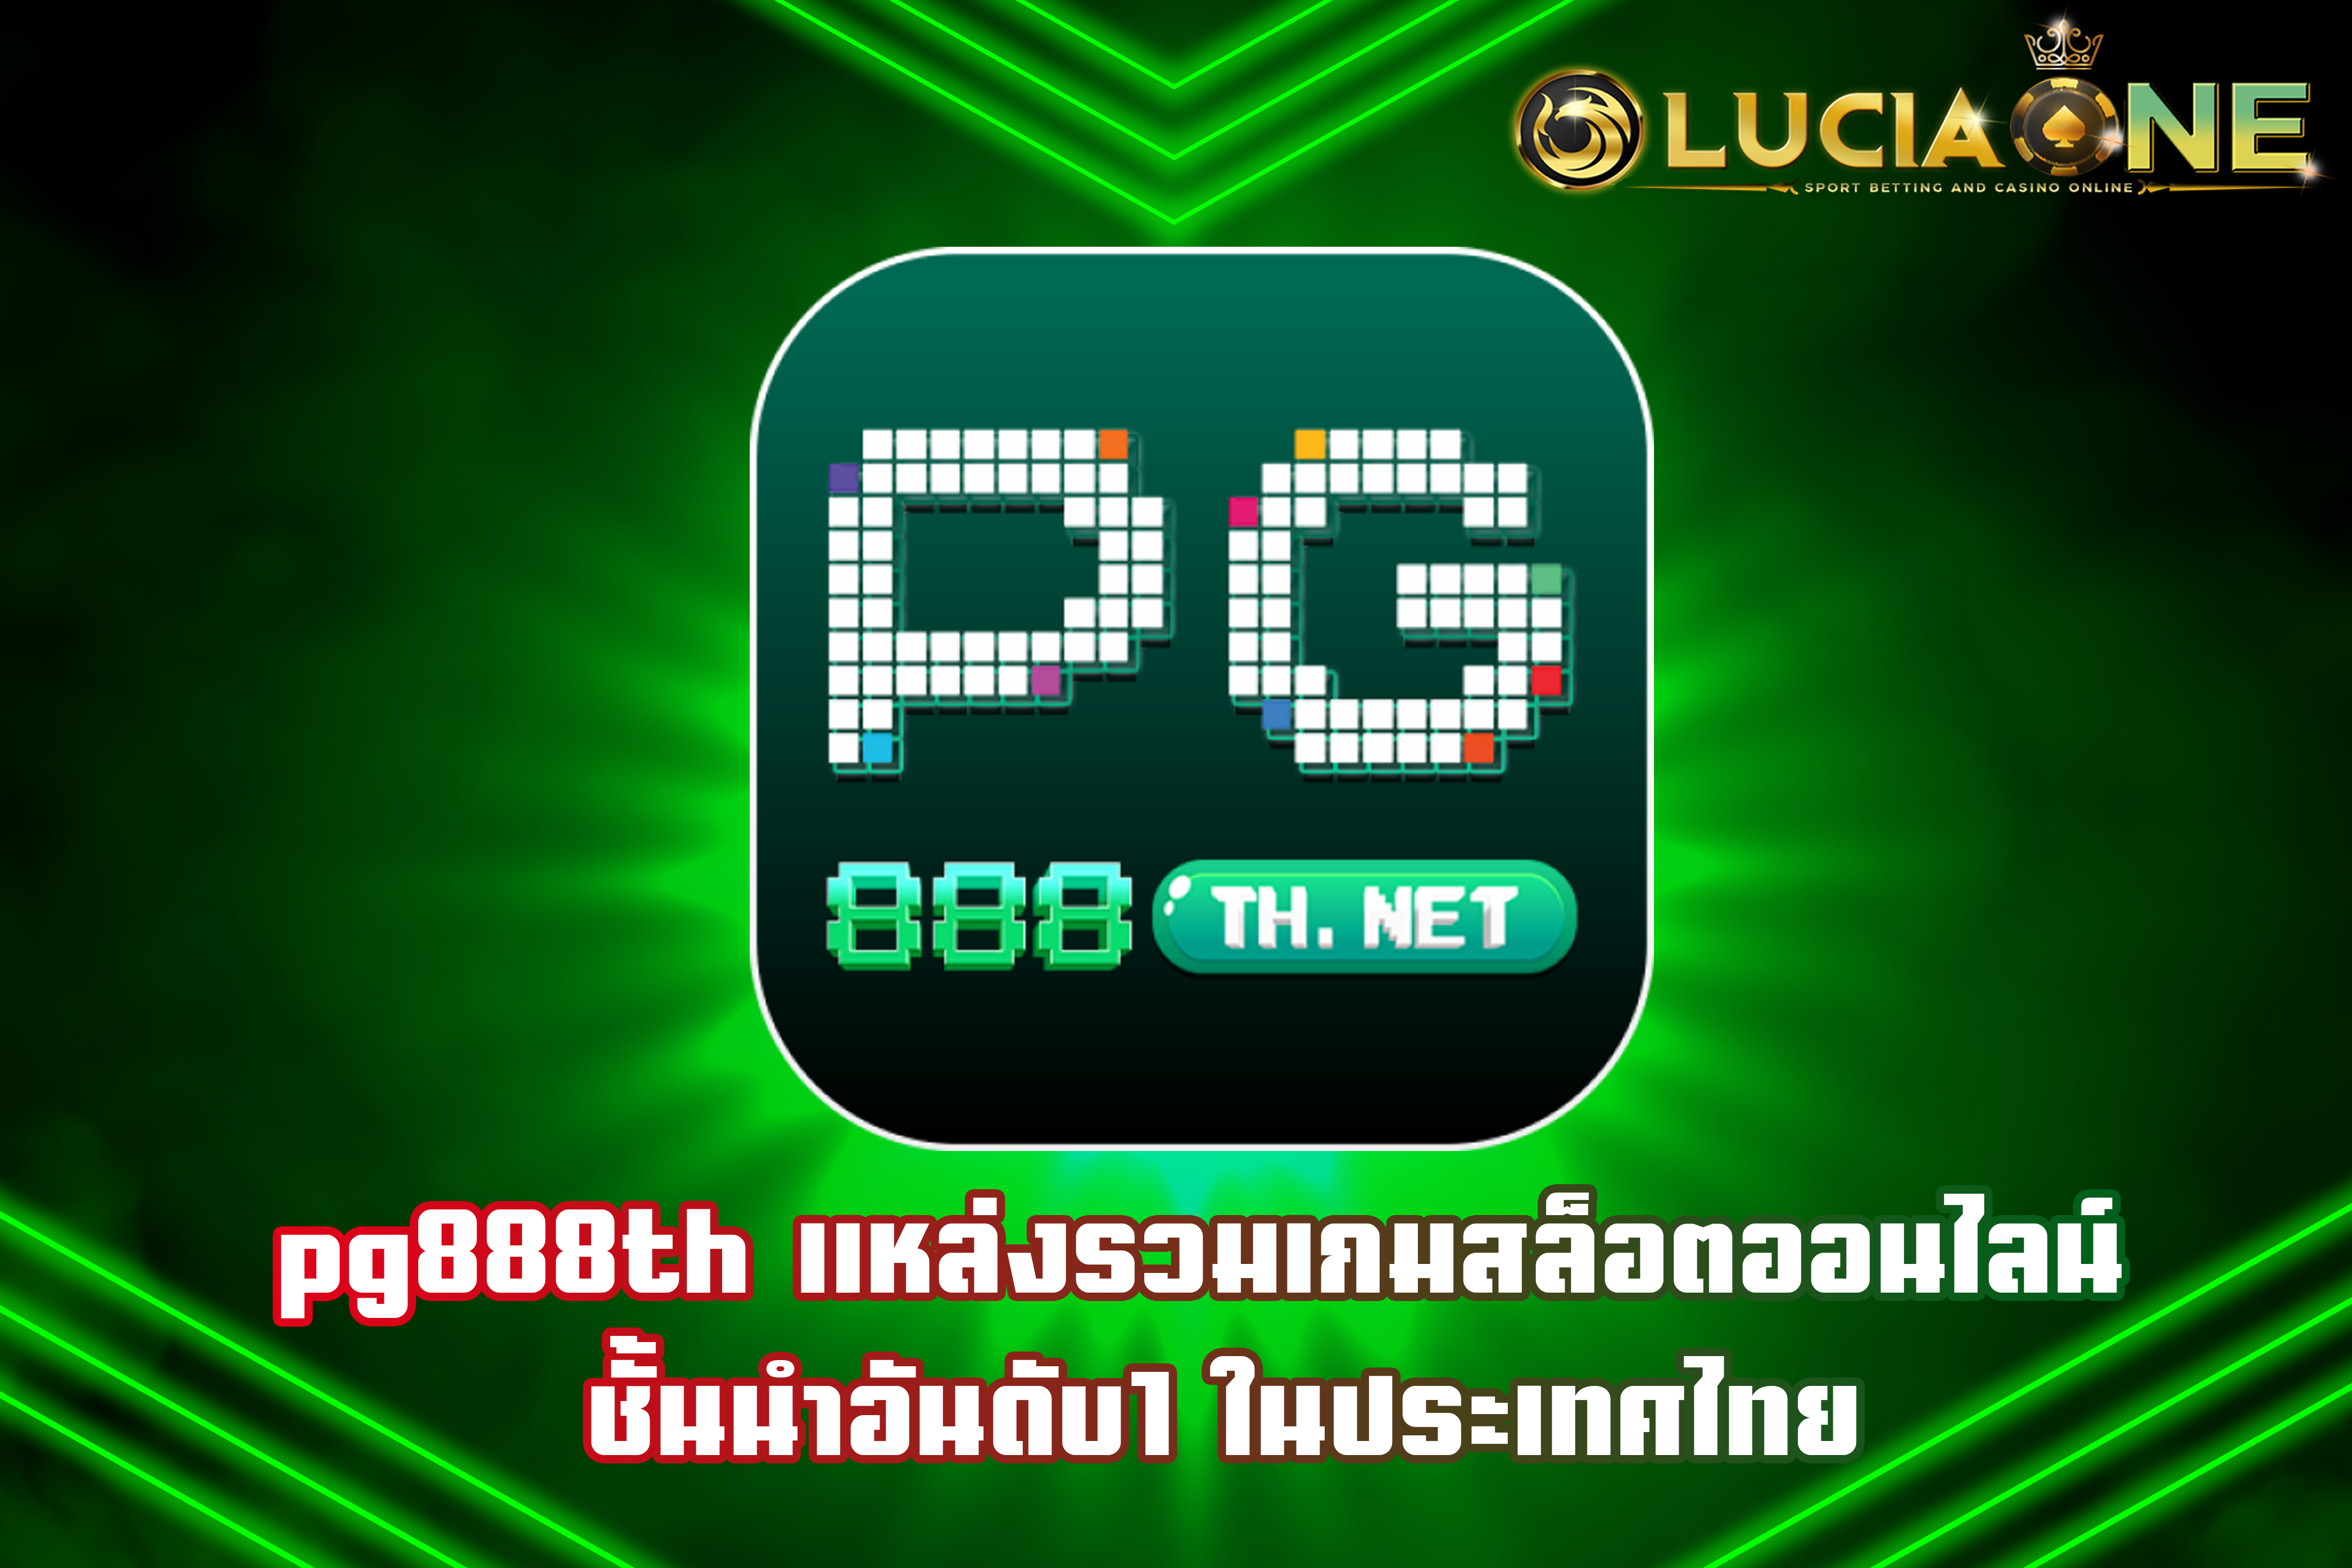 pg888th แหล่งรวมเกมสล็อตออนไลน์ ชั้นนำอันดับ1 ในประเทศไทย